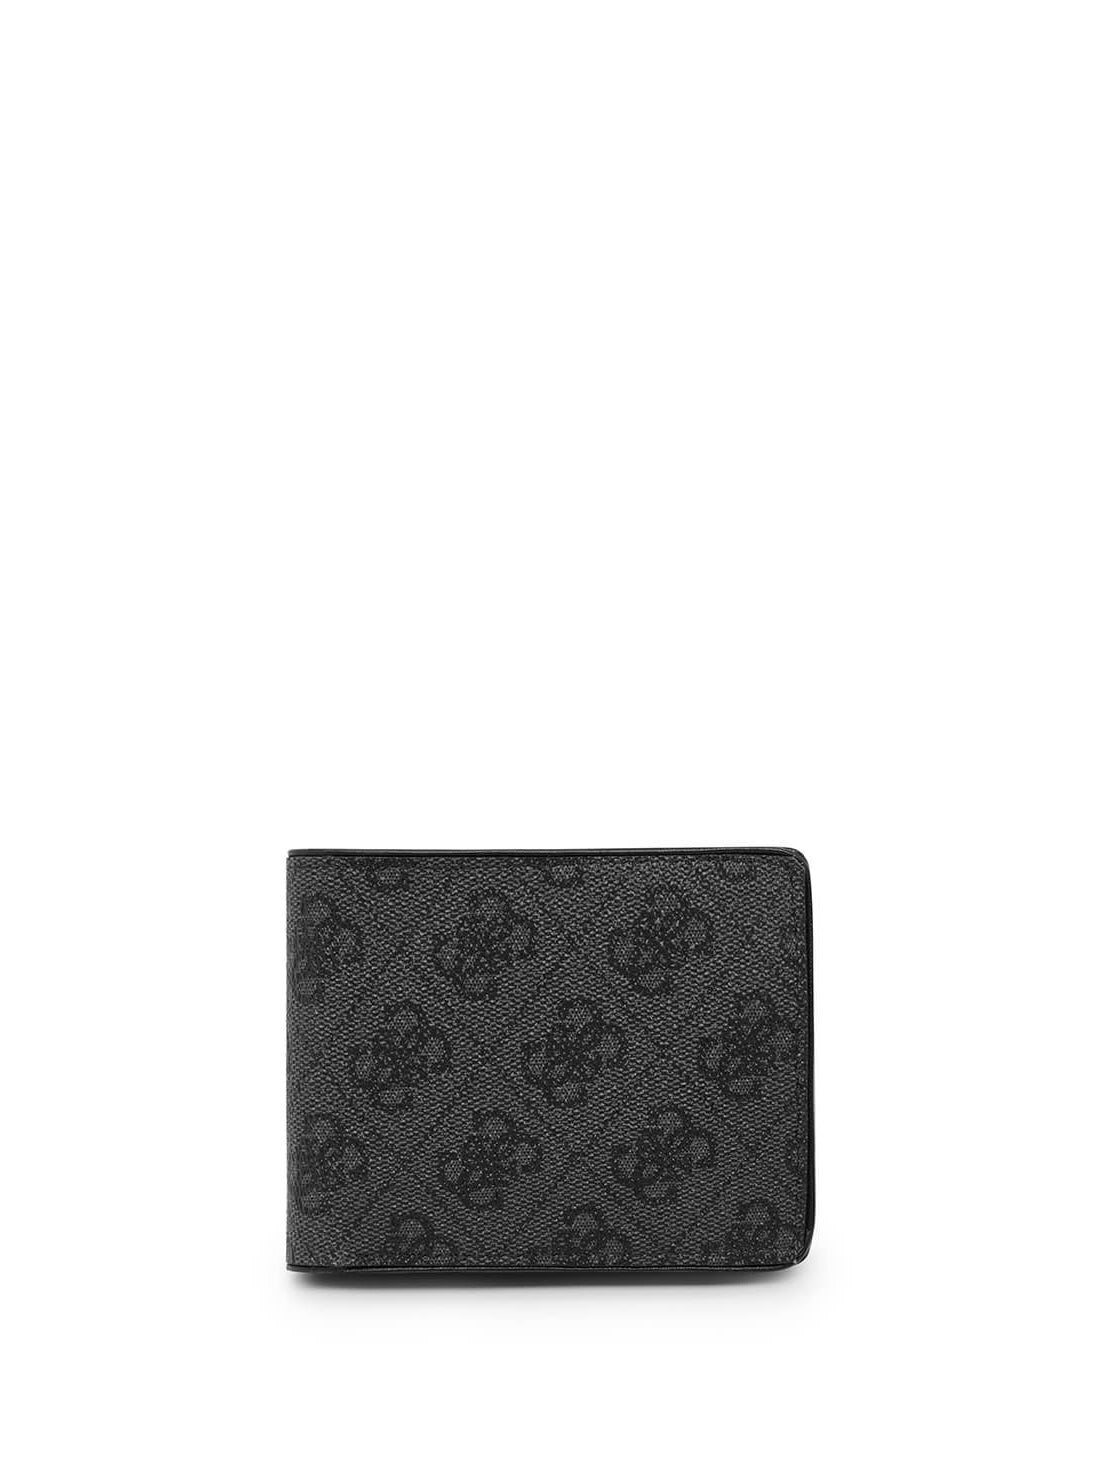 GUESS Men's Black Quattro G Slimfold Wallet 31GUE13217 Front View